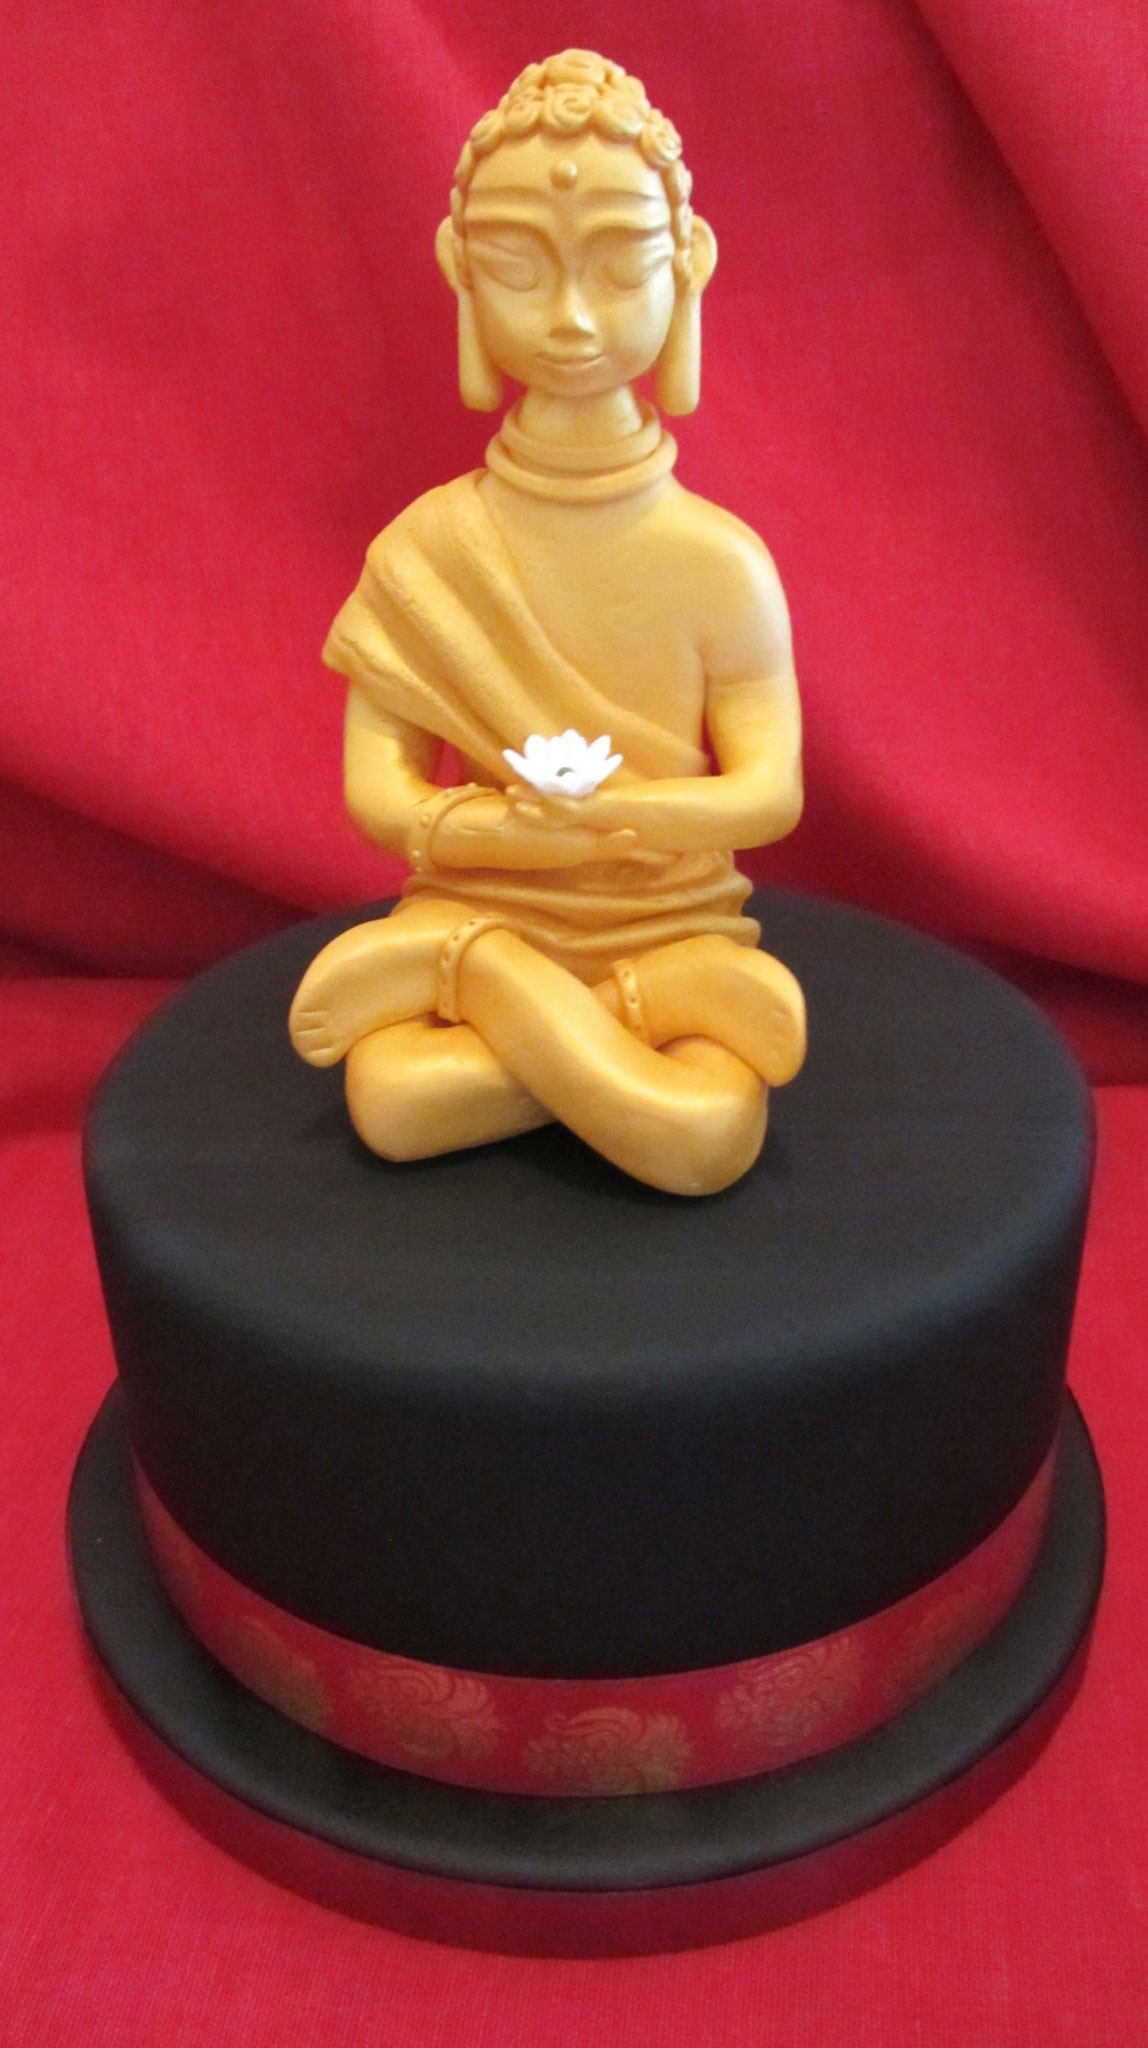 Buddha on cake 